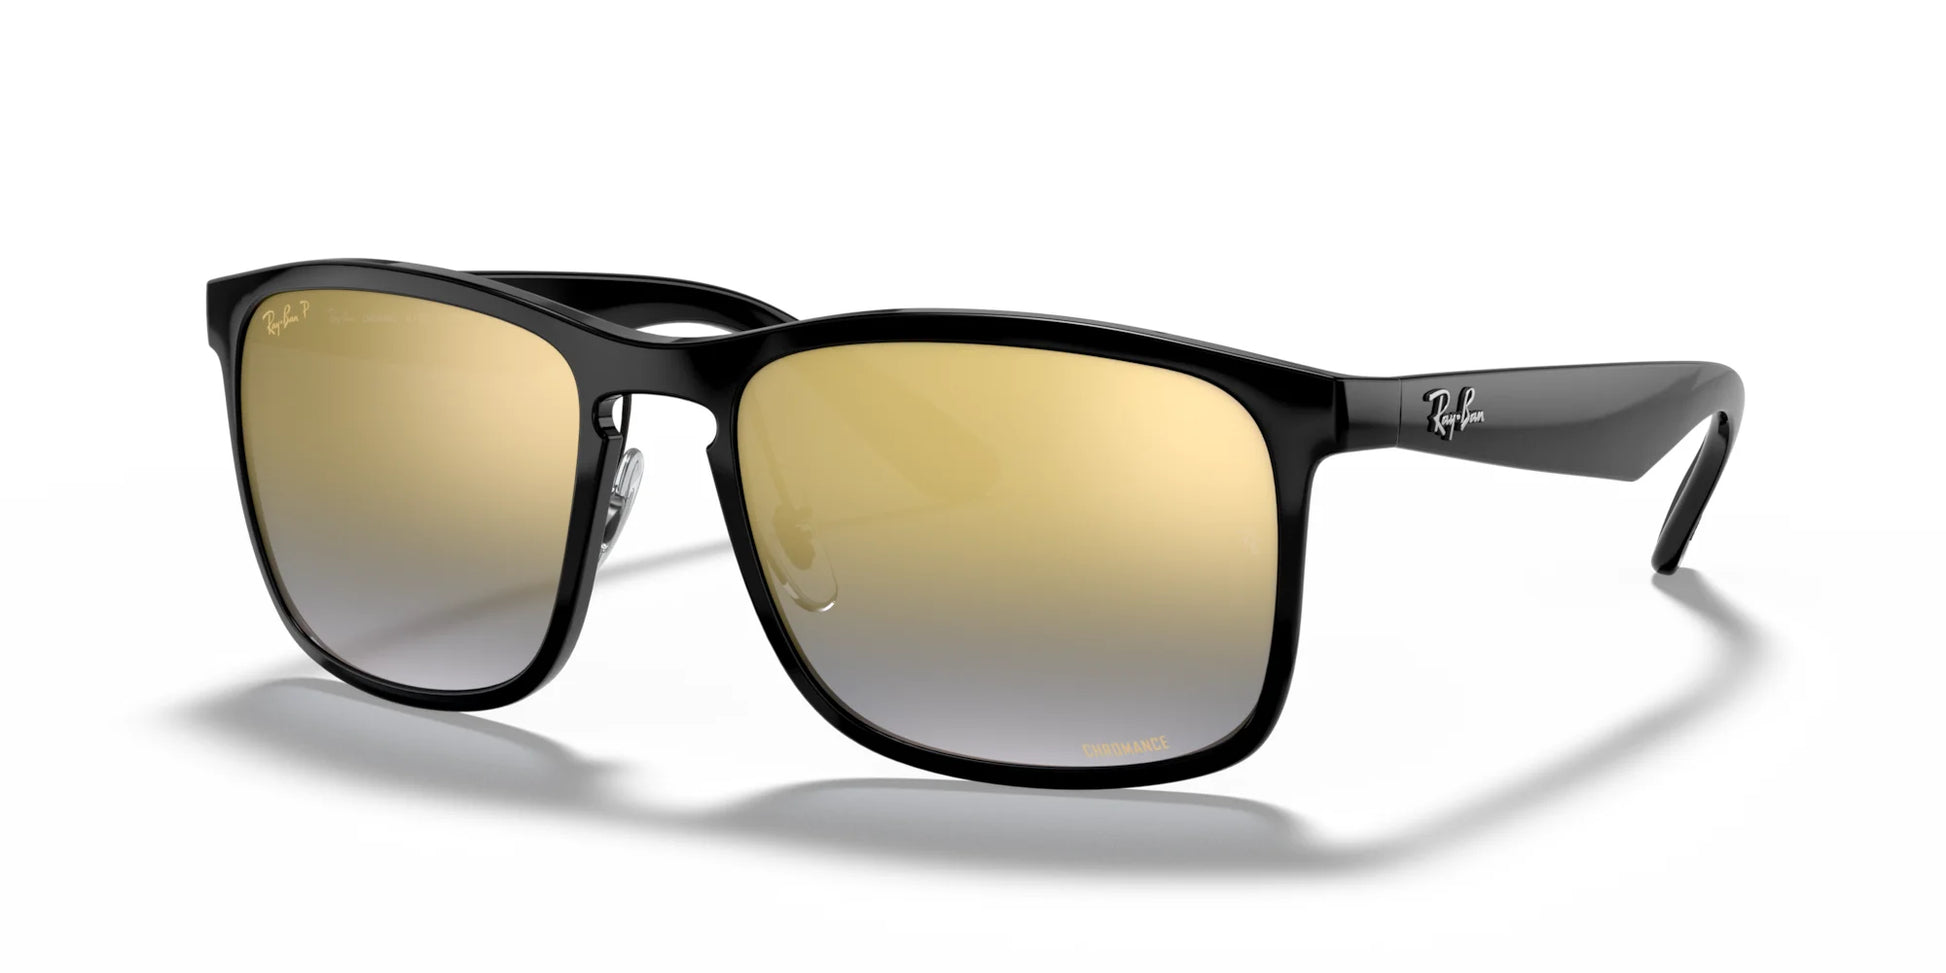 Ray-Ban RB4264 Sunglasses Black / Blue Mirror Gold Gradient (Polarized)